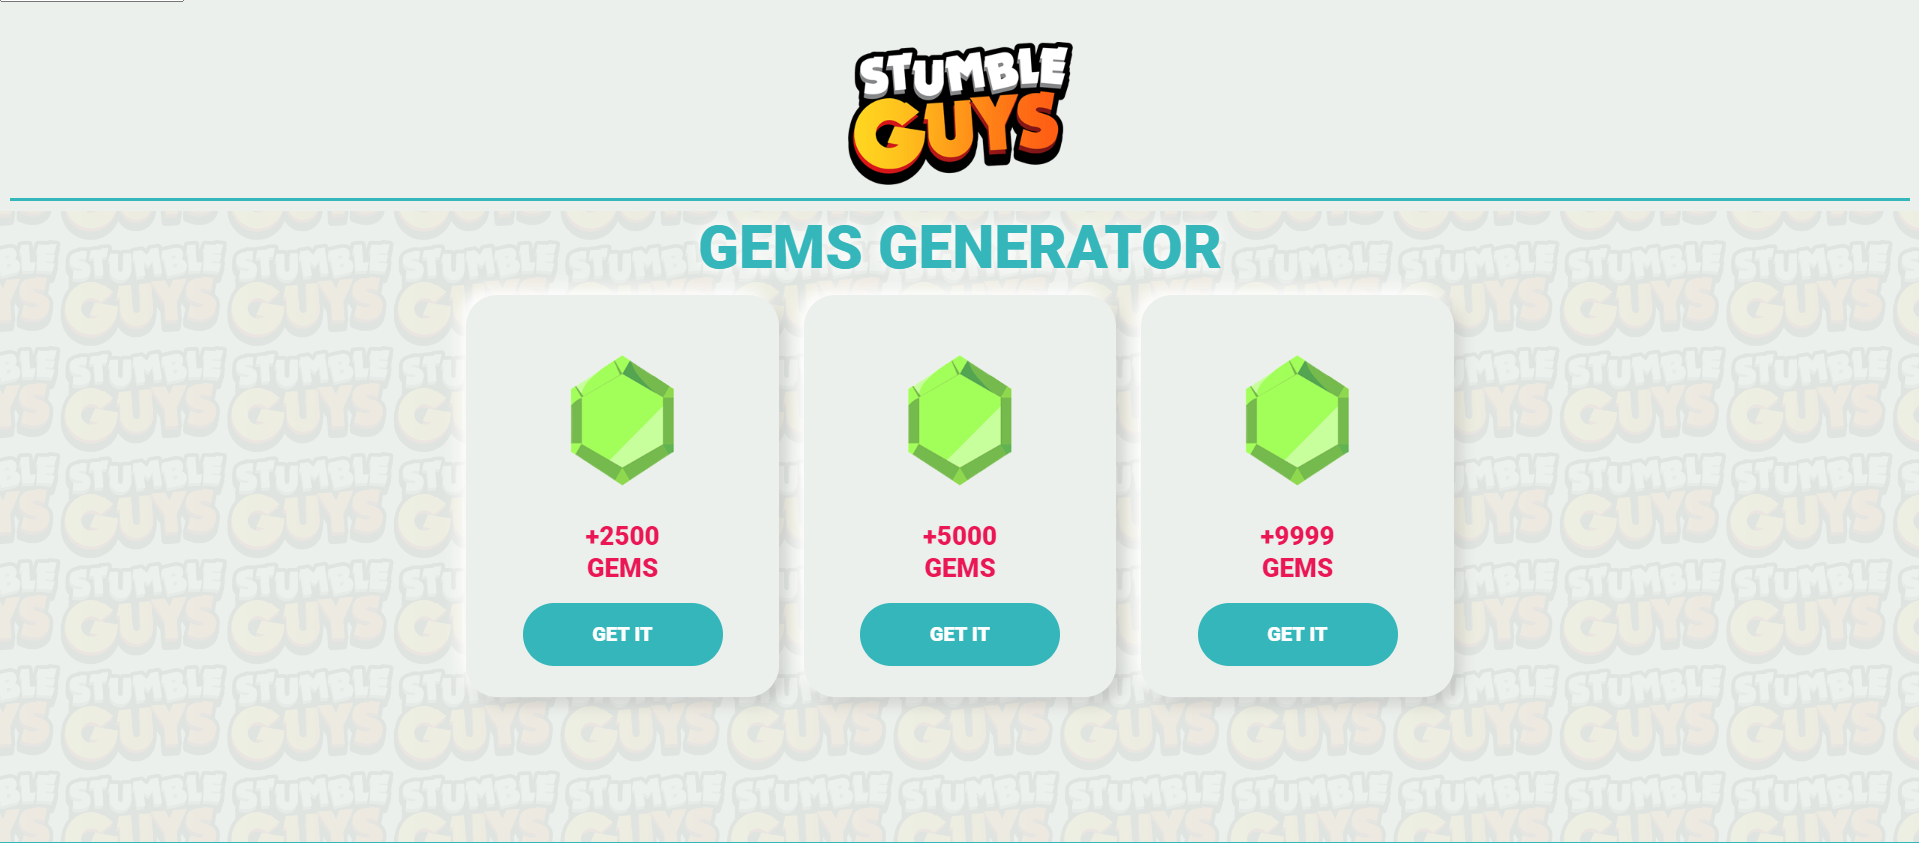 Free Stumble Guys Gems Generator Ps4